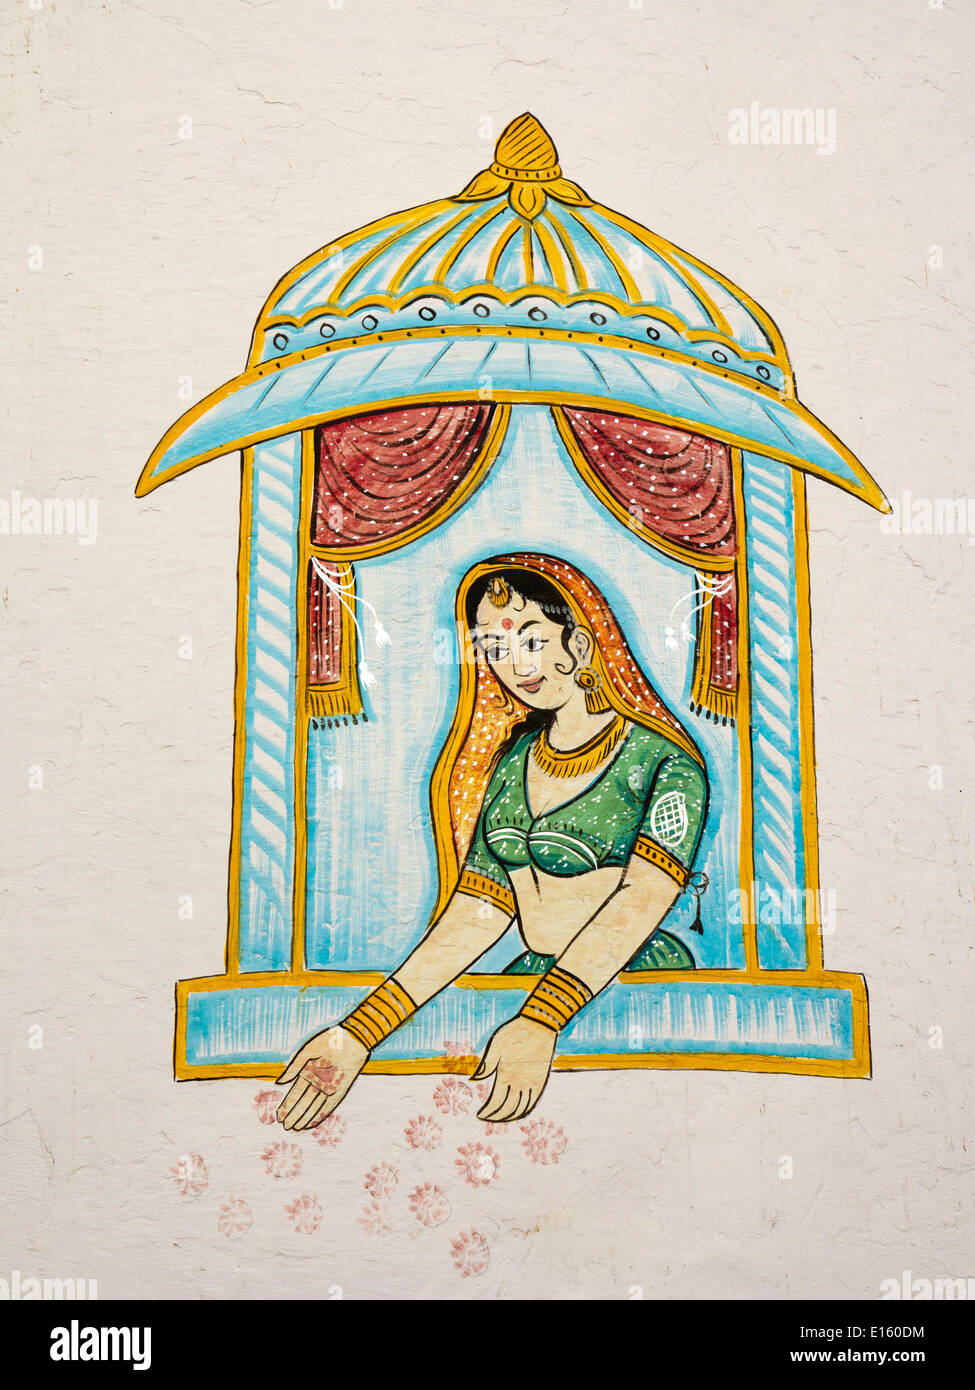 India Rajasthan, Udaipur, tradizionale pittura murale di Rajput donna, in stile Mughal finestra Foto Stock